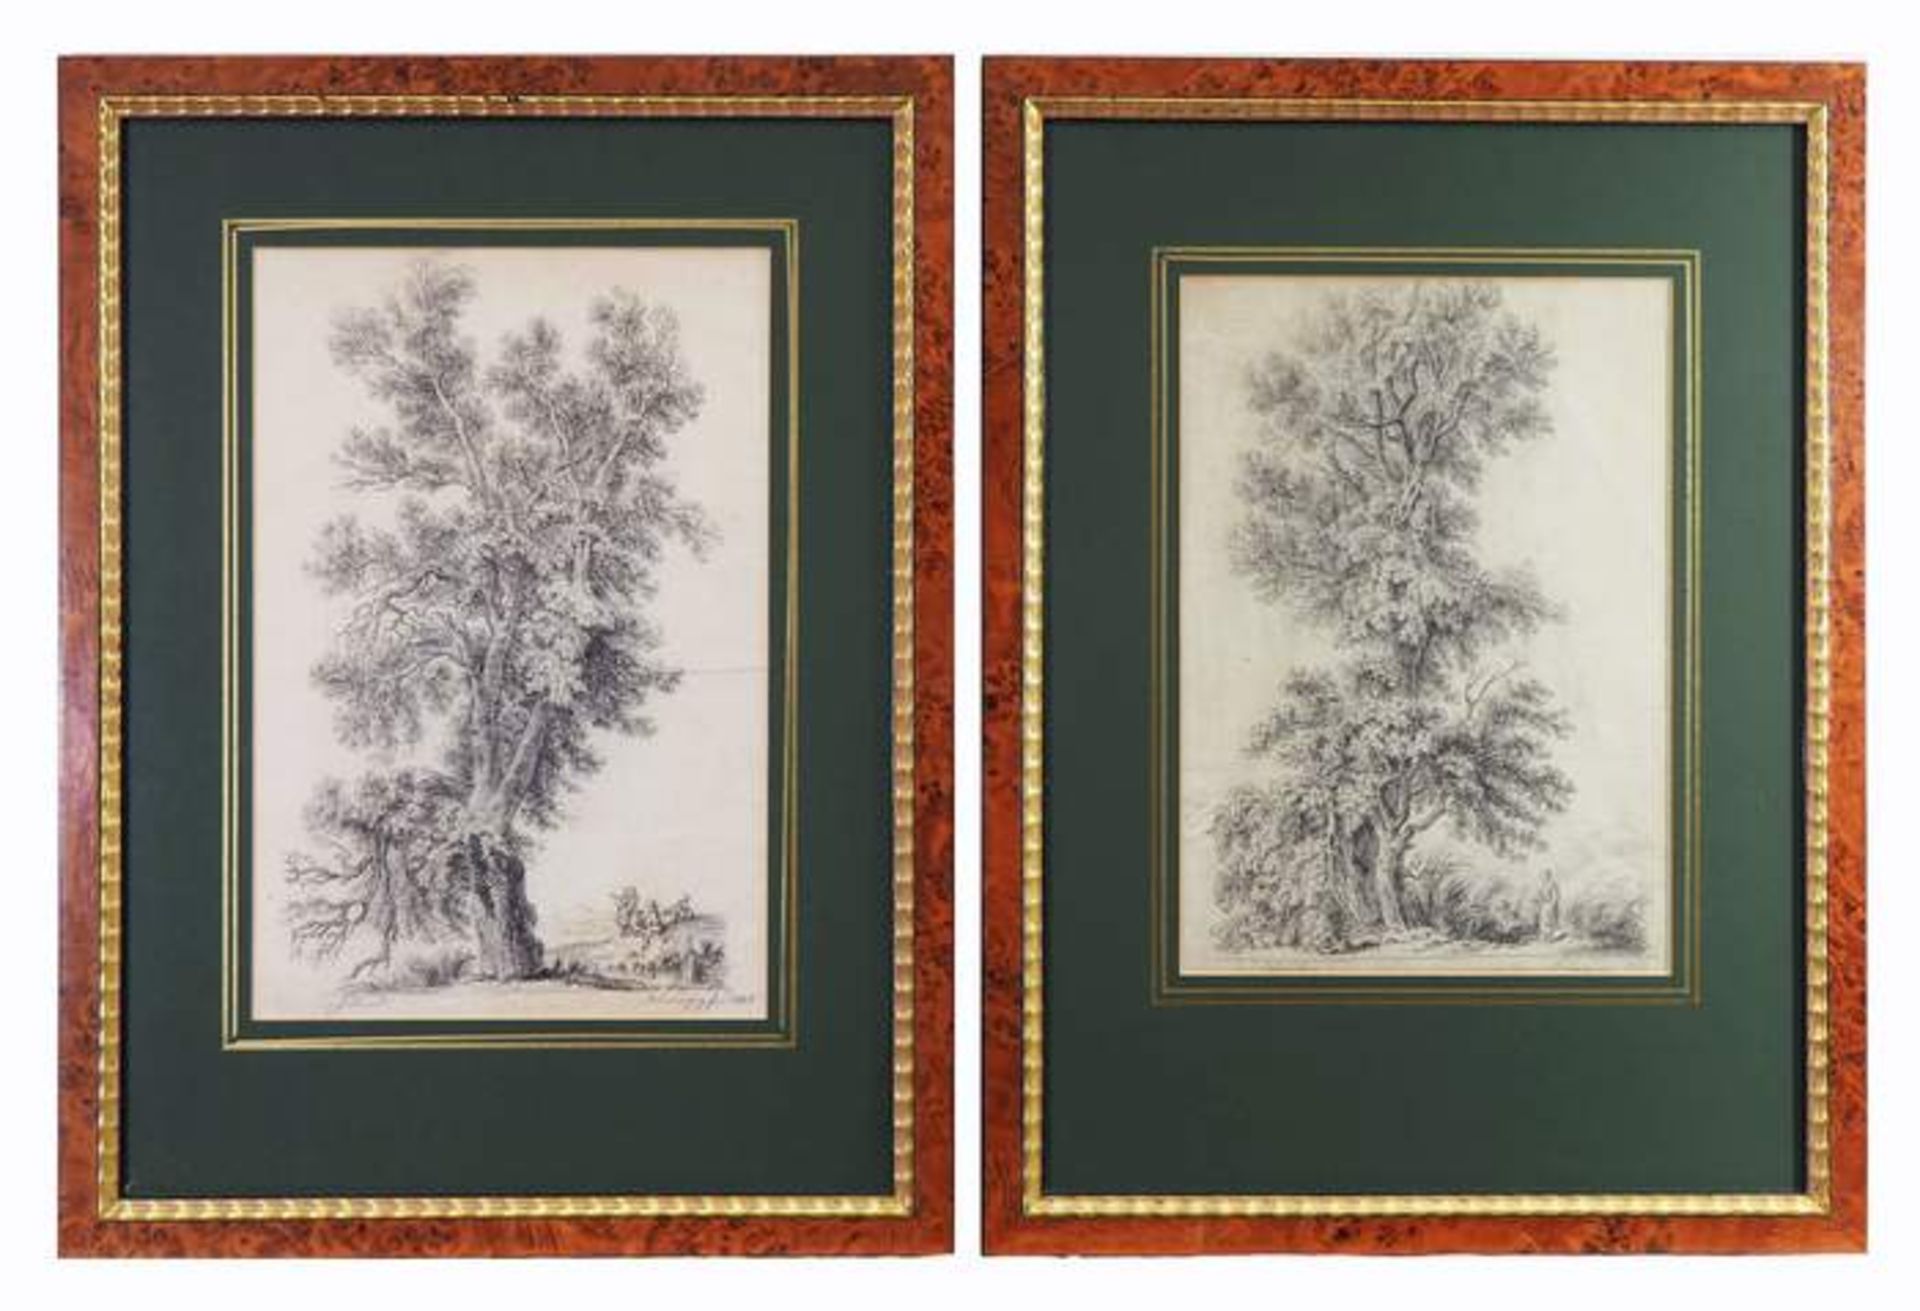 Paar Biedermeier-Handzeichnungen, datiert 1818.Paar Biedermeier-Handzeichnungen, datiert 1818.